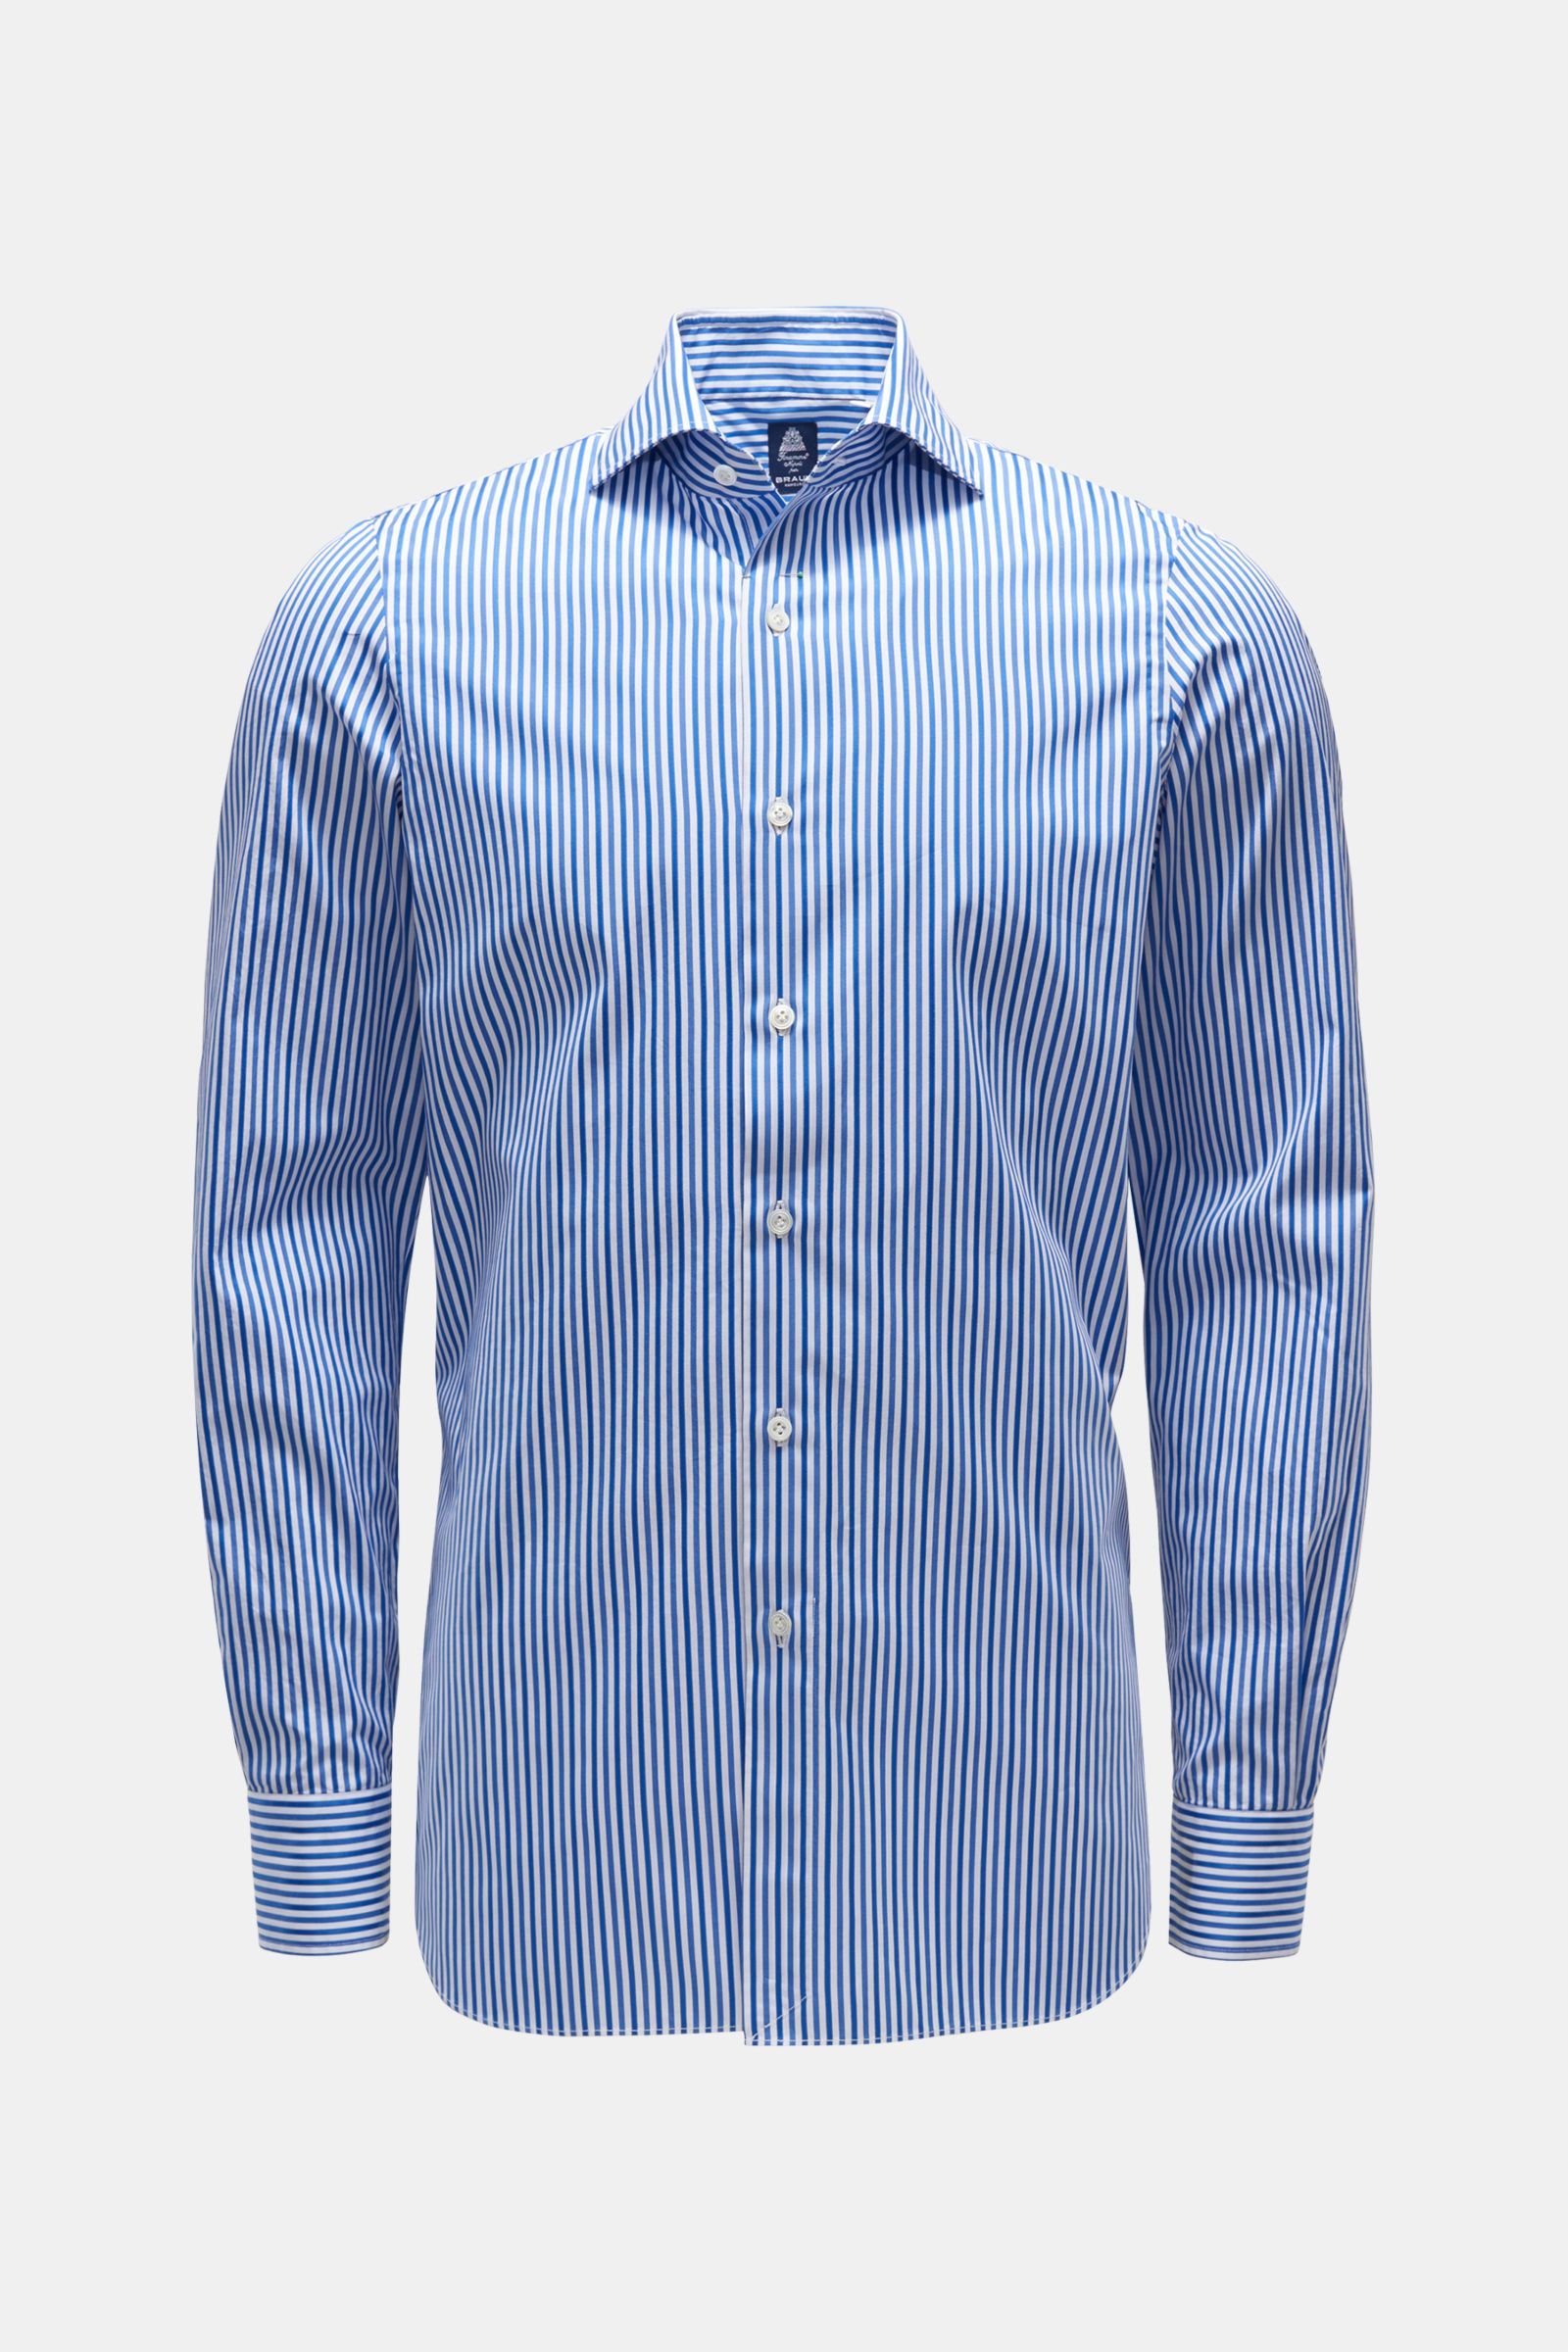 Casual shirt 'Eduardo Napoli' shark collar blue/white striped